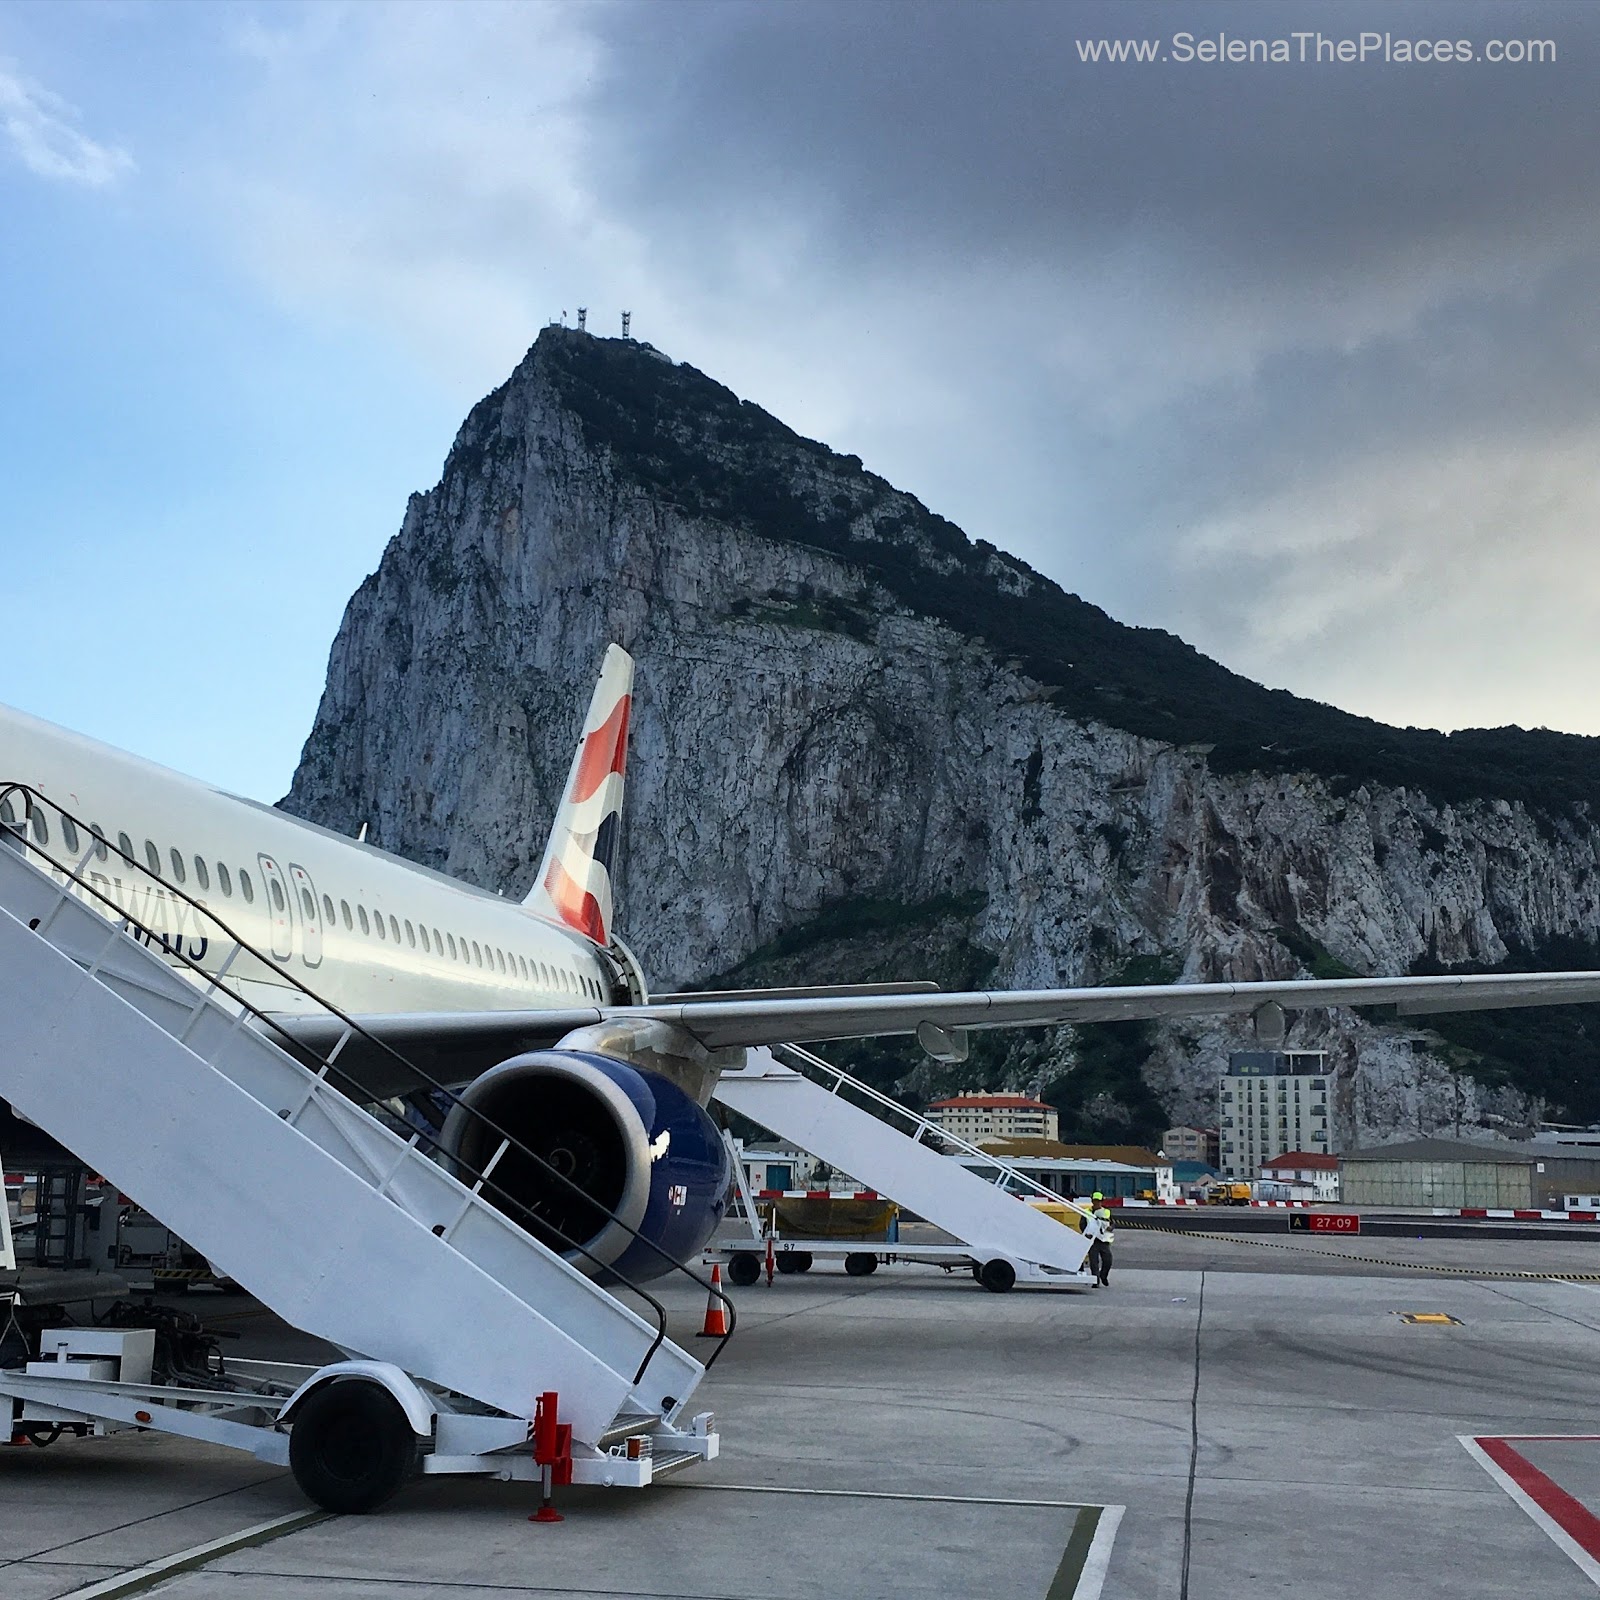 A Weekend Break in Gibraltar